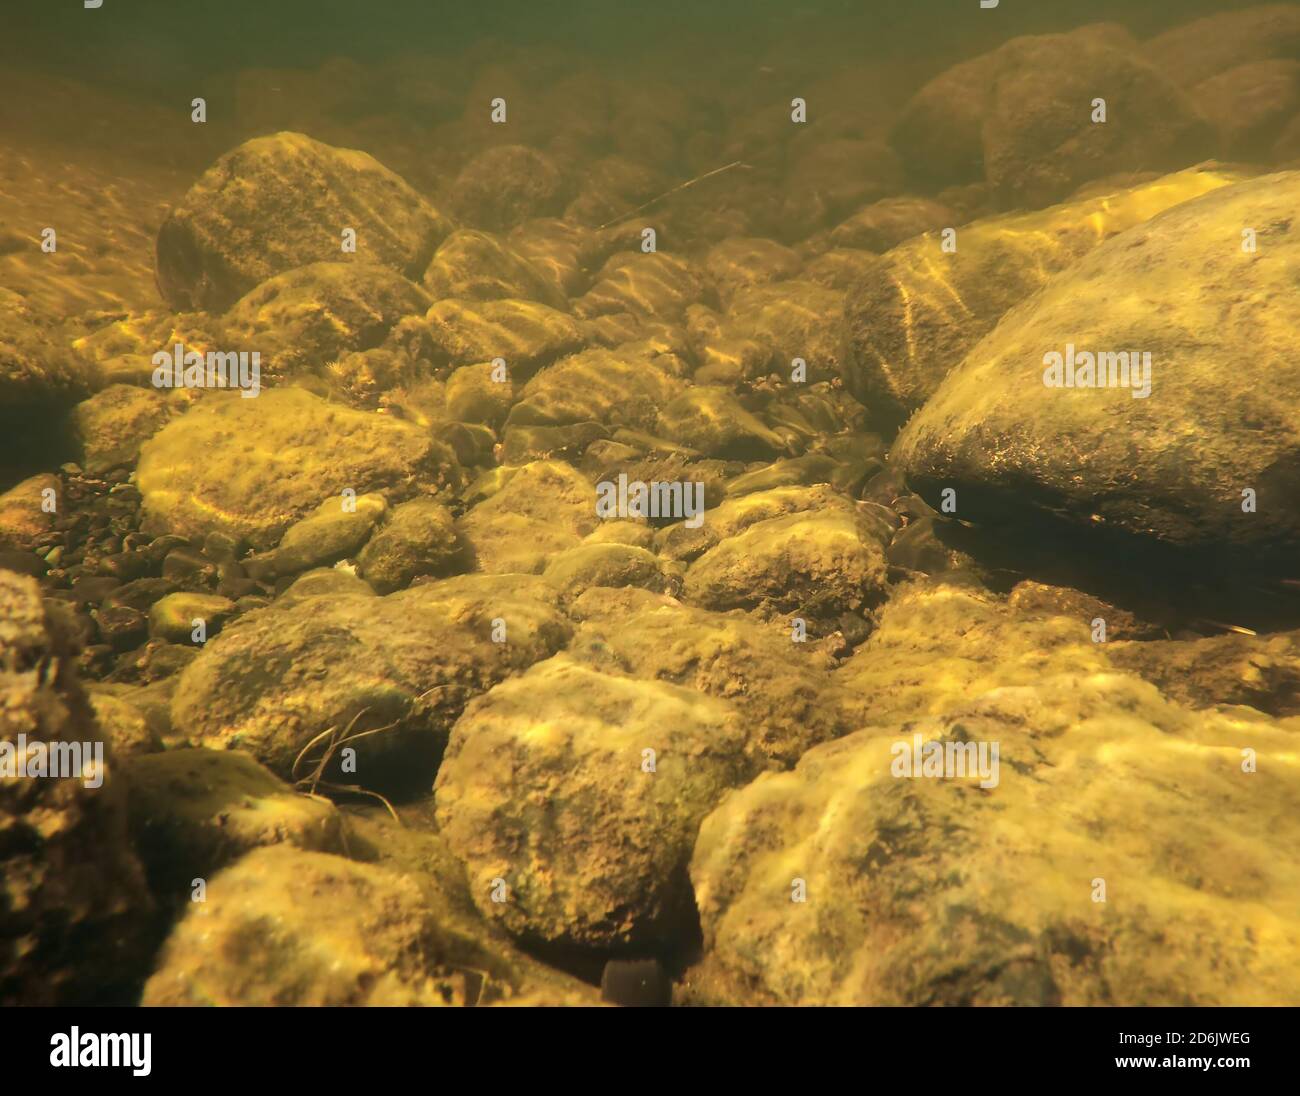 Underwater shot of rocks in a shallow stream Stock Photo - Alamy